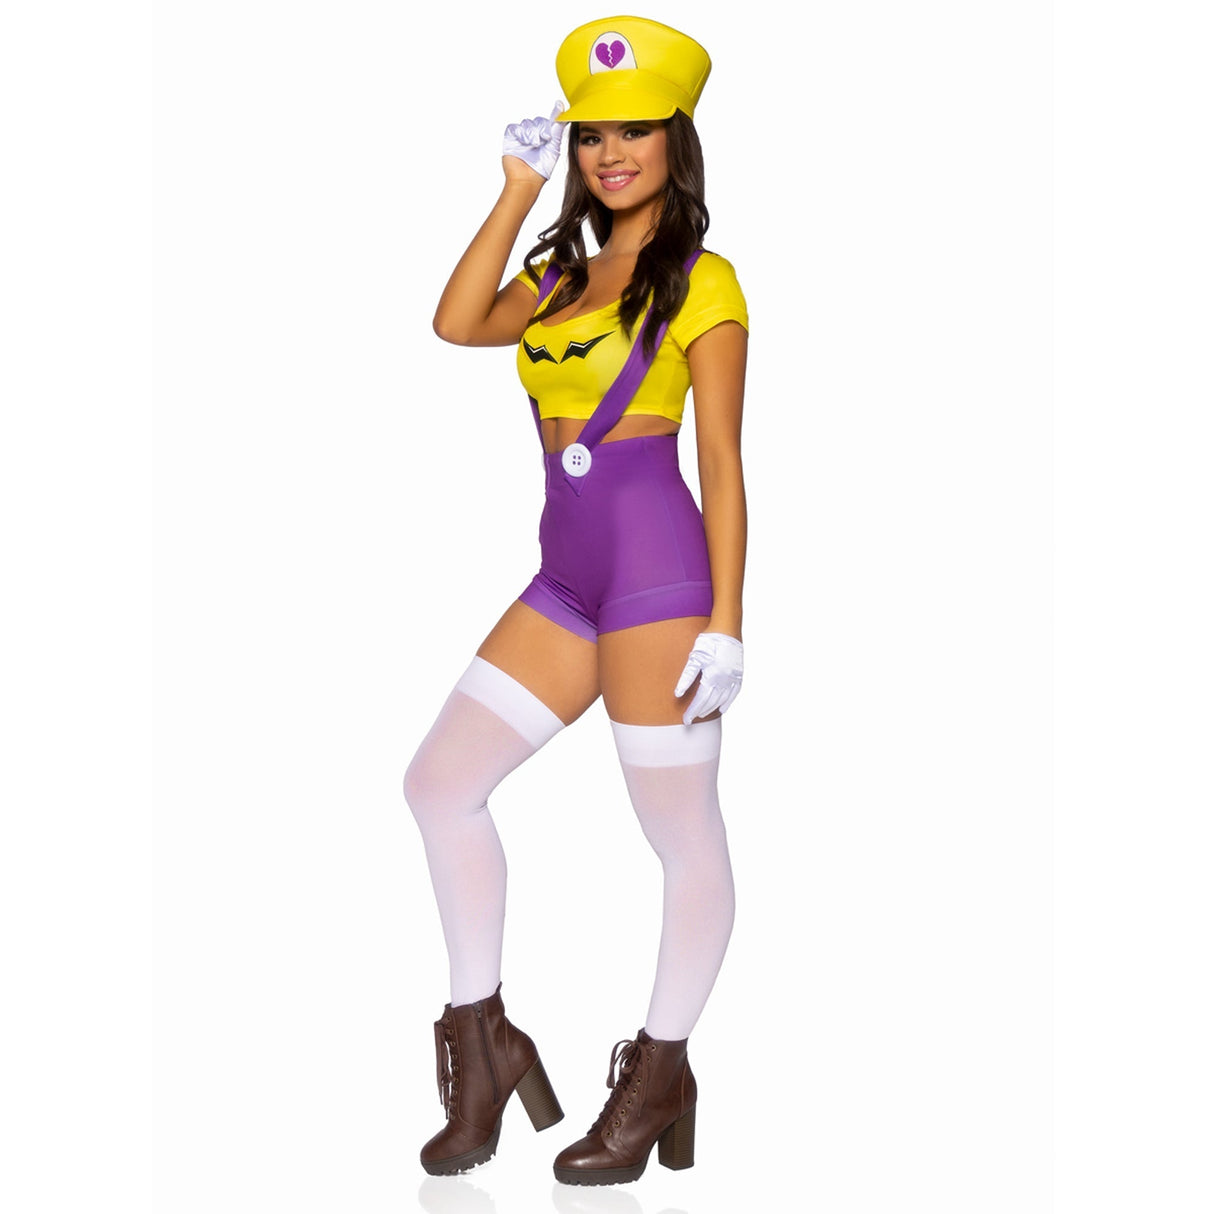 LEG AVENUE/SKU DISTRIBUTORS INC Costumes Gamer Villain Sexy Costume for Adults, Yellow Crop Top and Purple Short